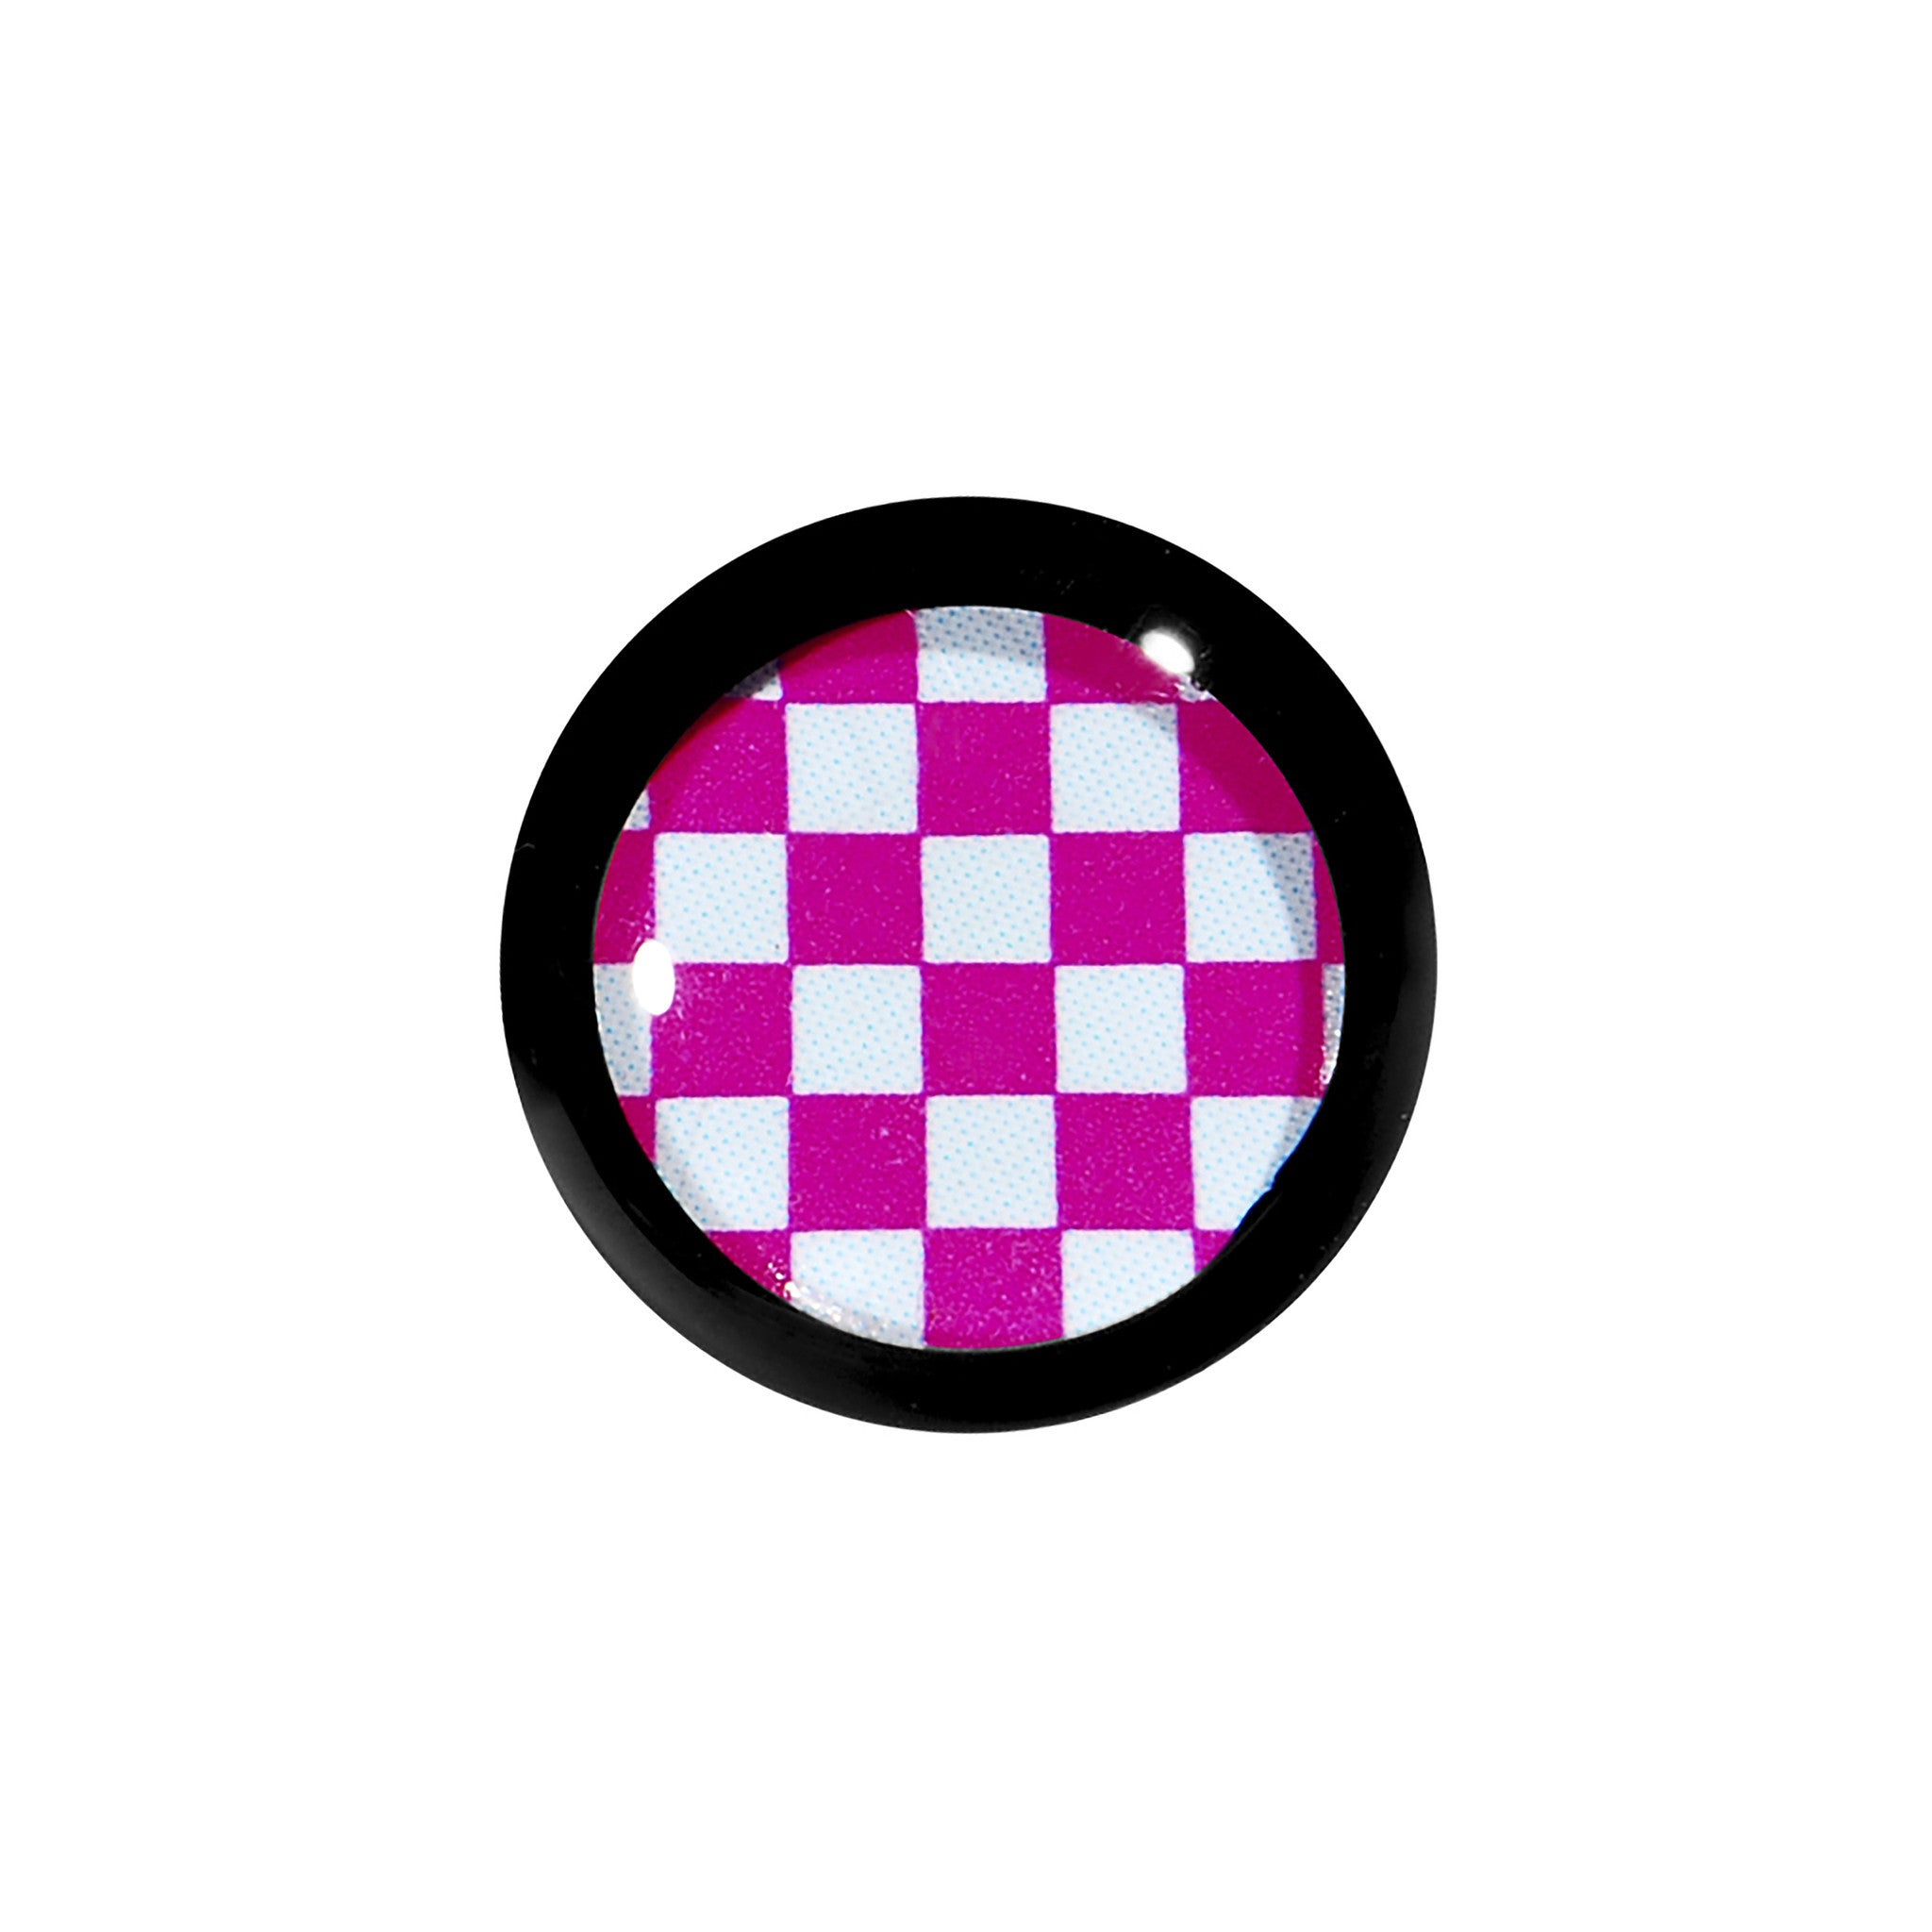 0 Gauge Black Acrylic Pink and White Checkerboard Saddle Plug